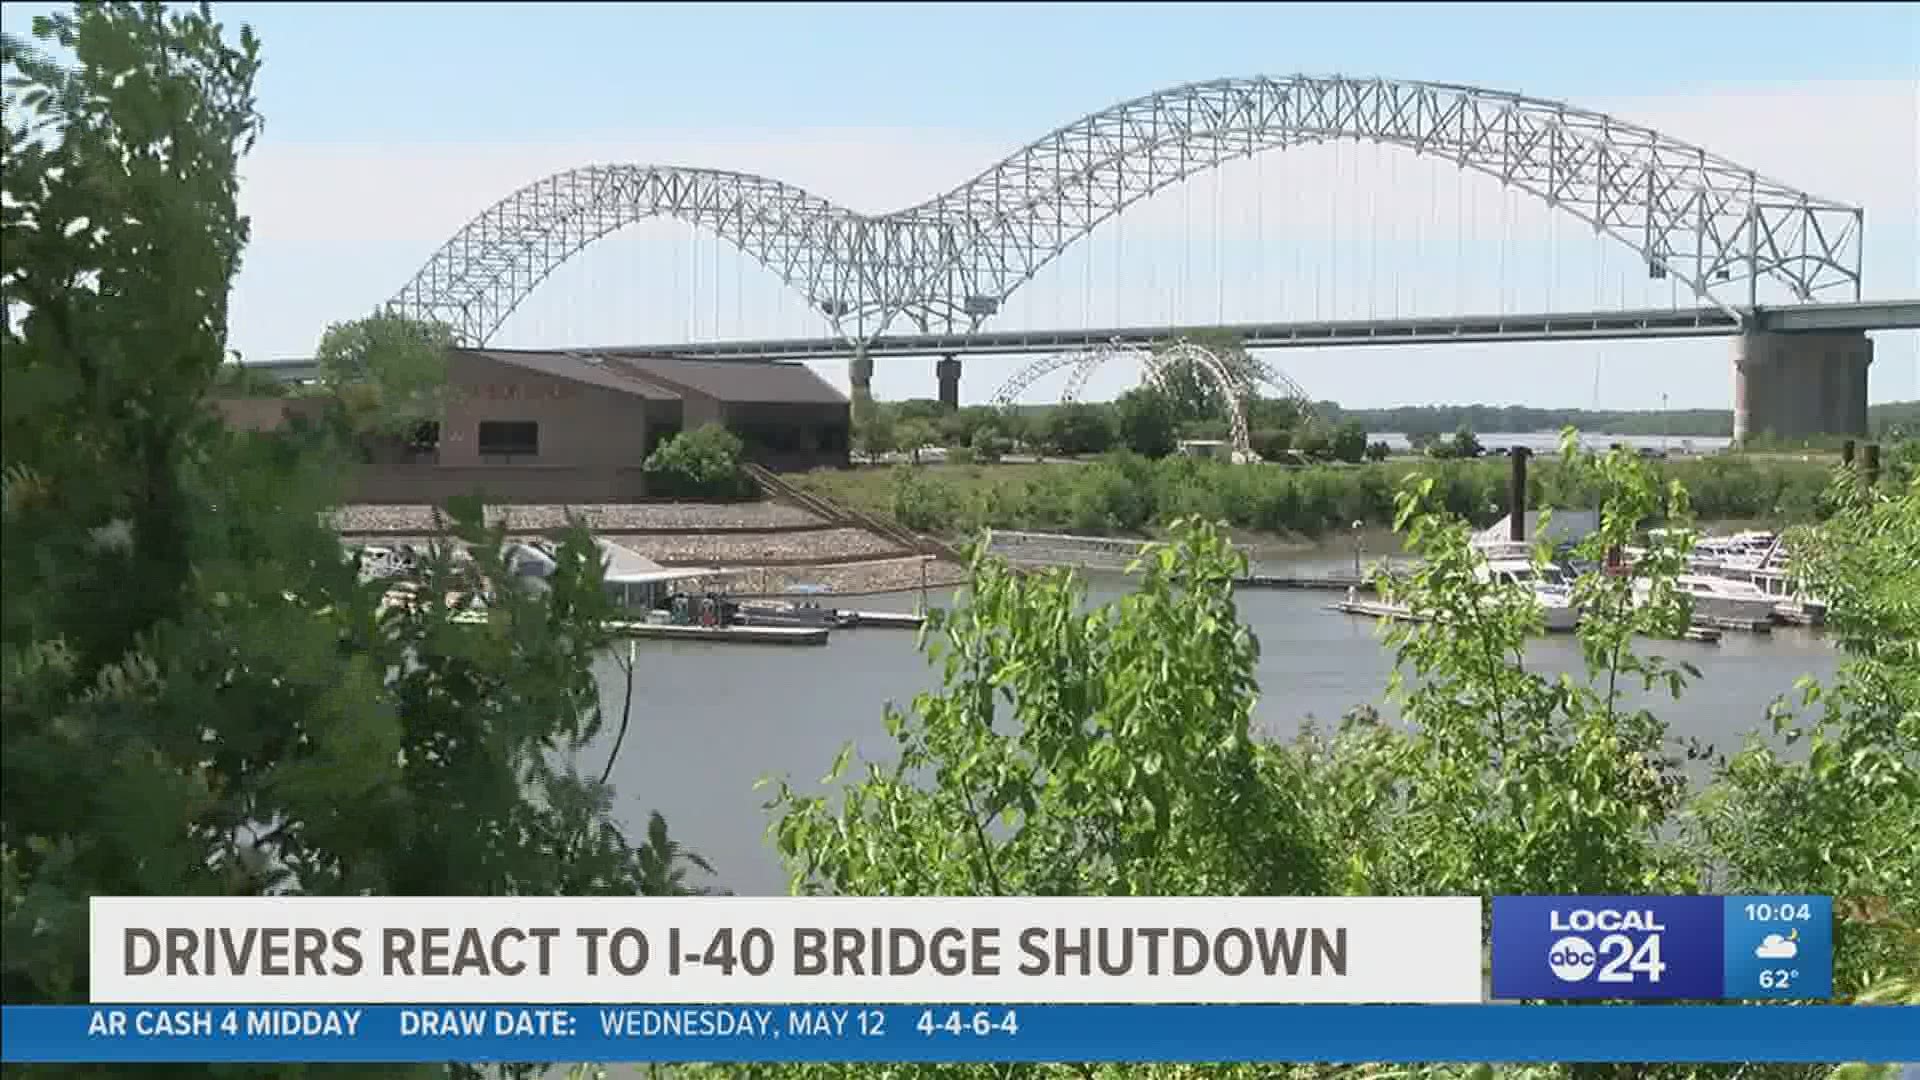 The bridge repairs in Memphis are bringing to mind President Joe Biden’s $2 trillion dollar infrastructure plan.